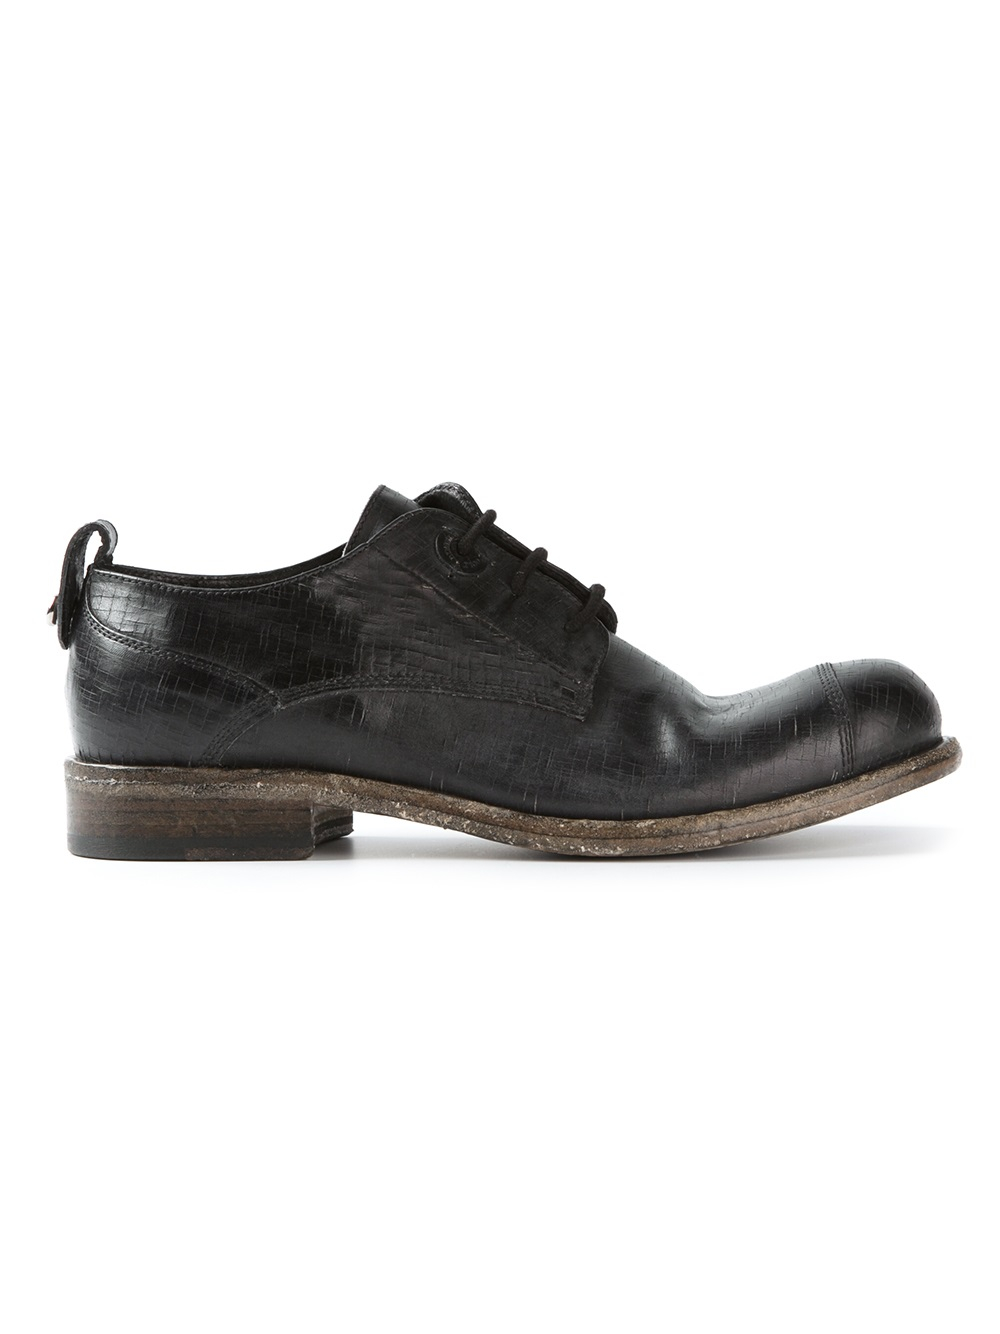 Lyst - Diesel Black Gold Distressed Oxford Shoes in Black for Men